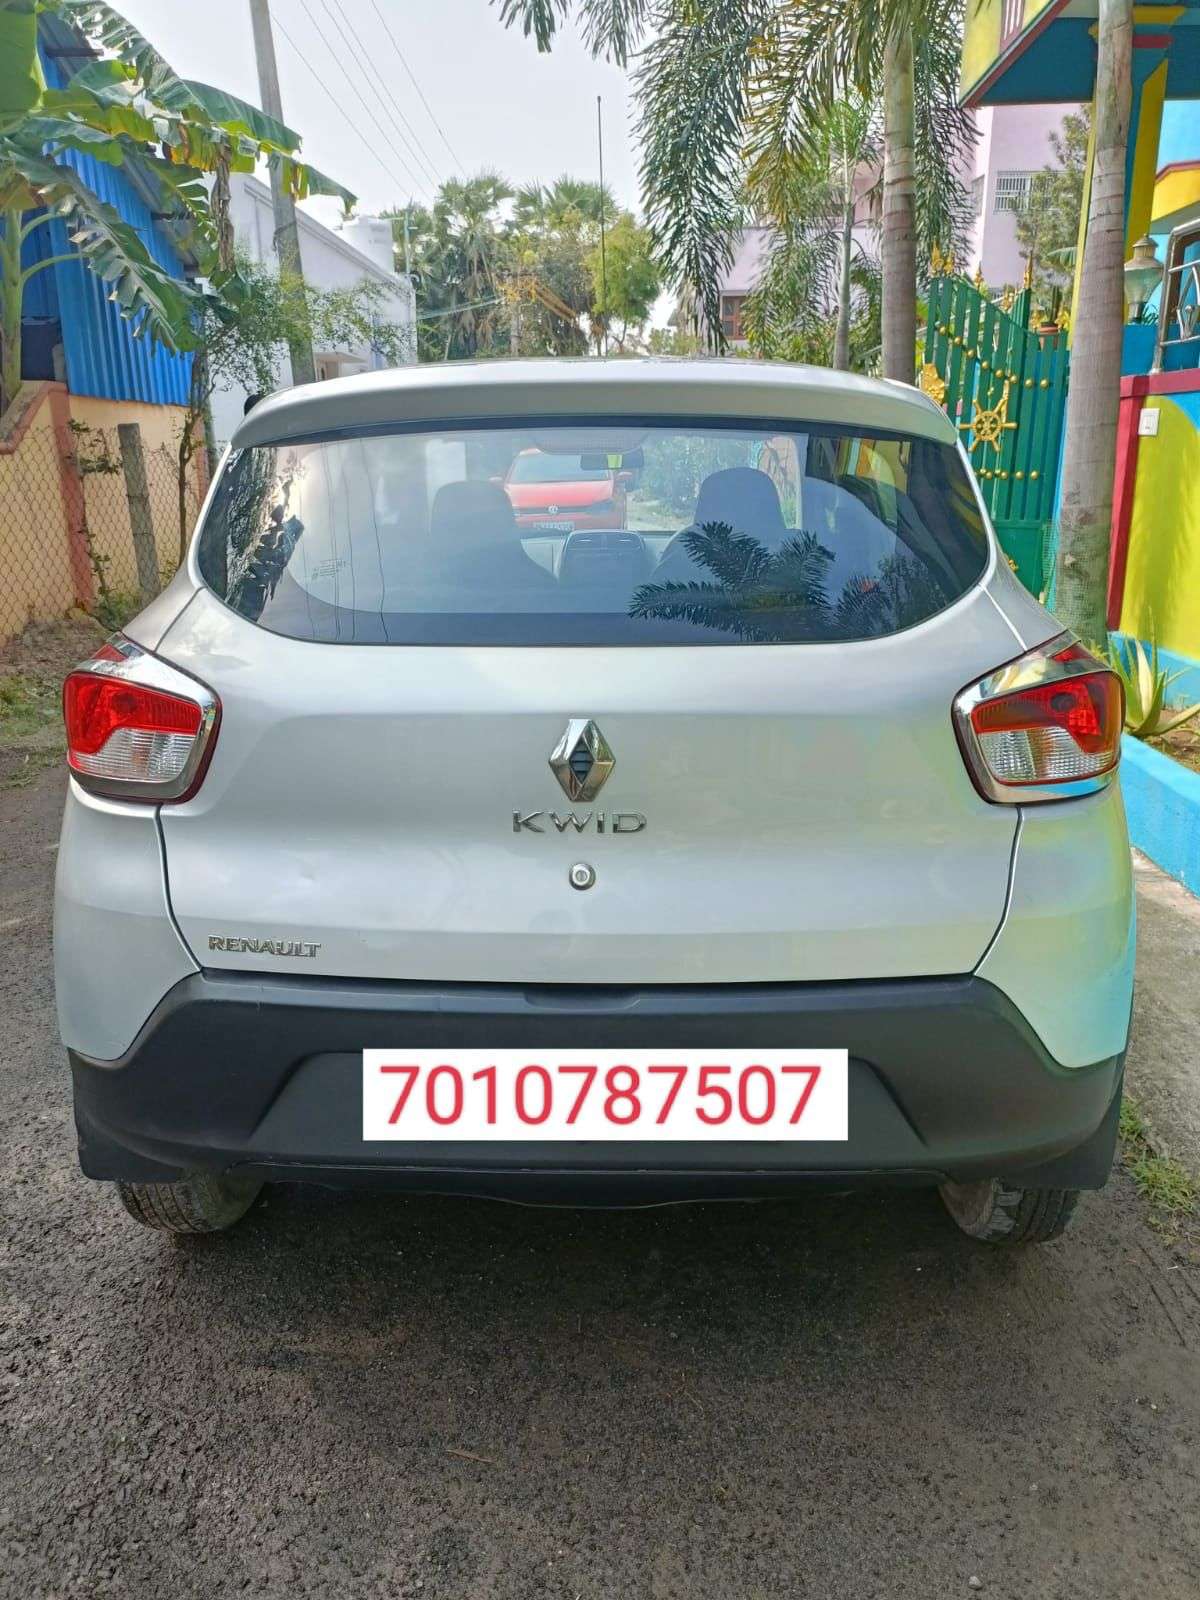 2552-for-sale-Renault-KWID-Diesel-First-Owner-2018-TN-registered-rs-400000